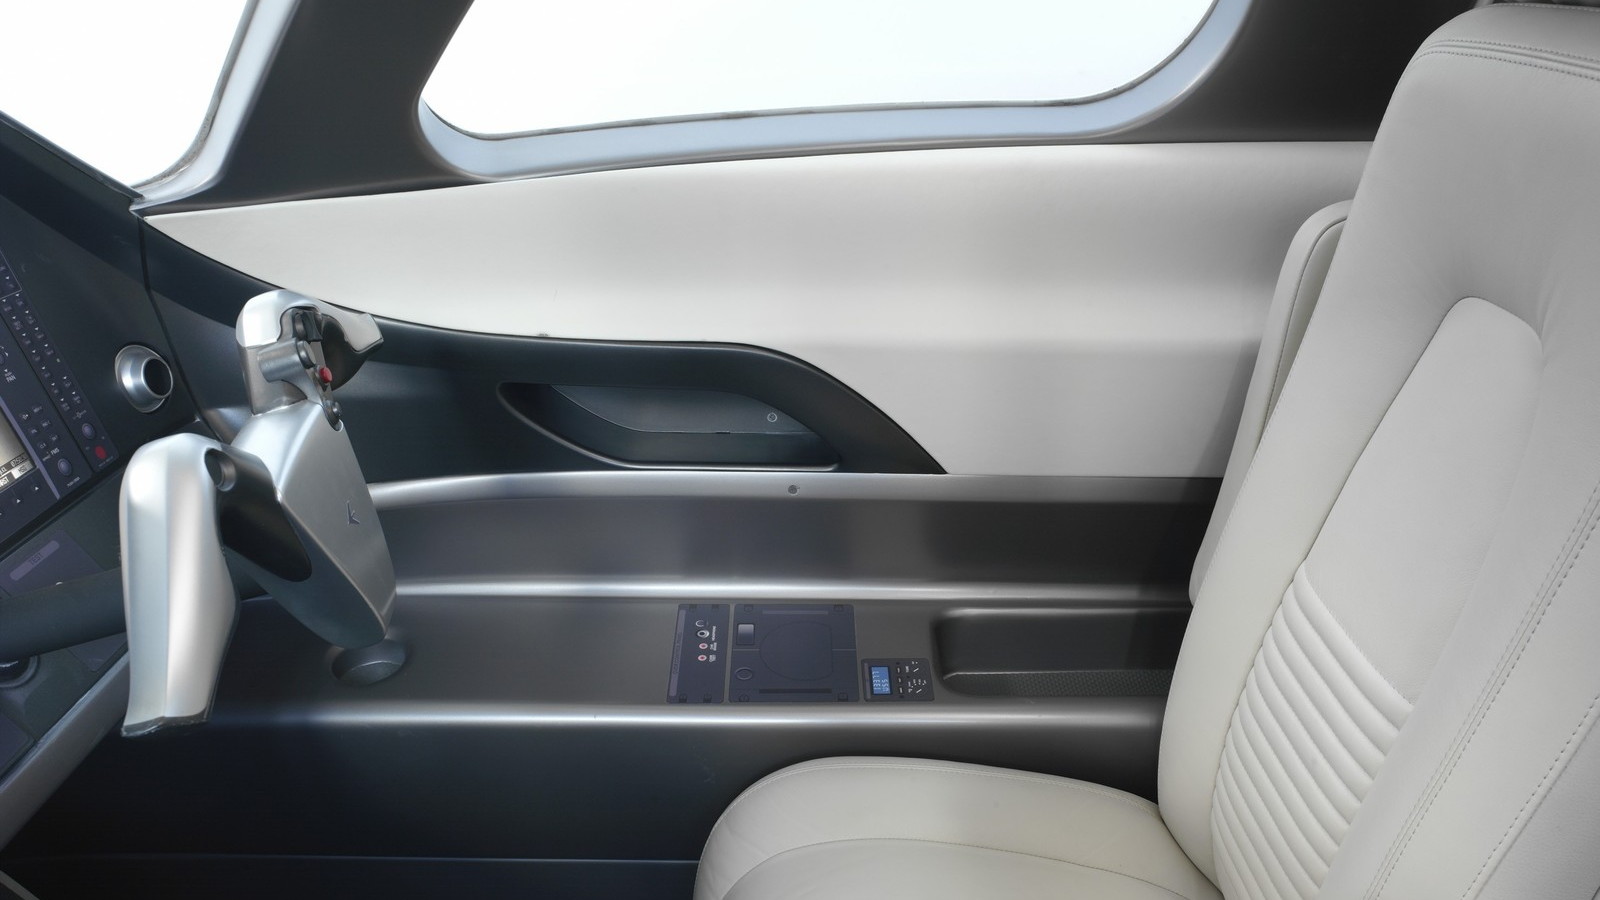 BMW DesignworksUSA Embraer Phenom jet interior